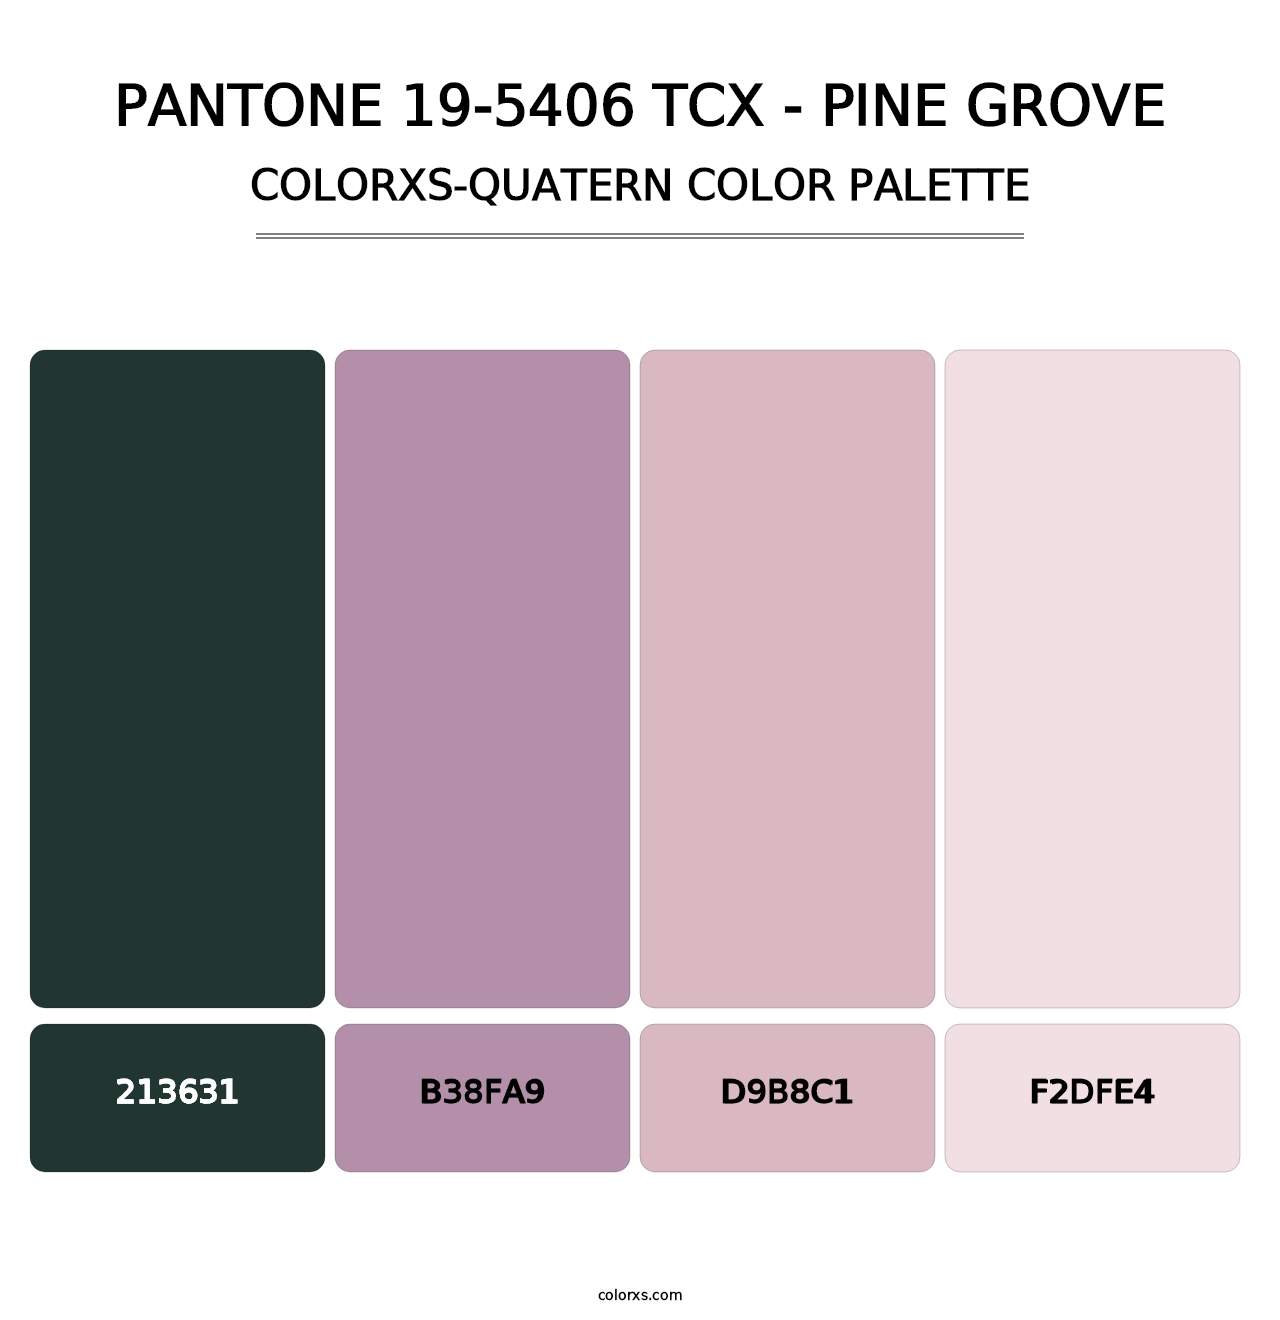 PANTONE 19-5406 TCX - Pine Grove - Colorxs Quatern Palette